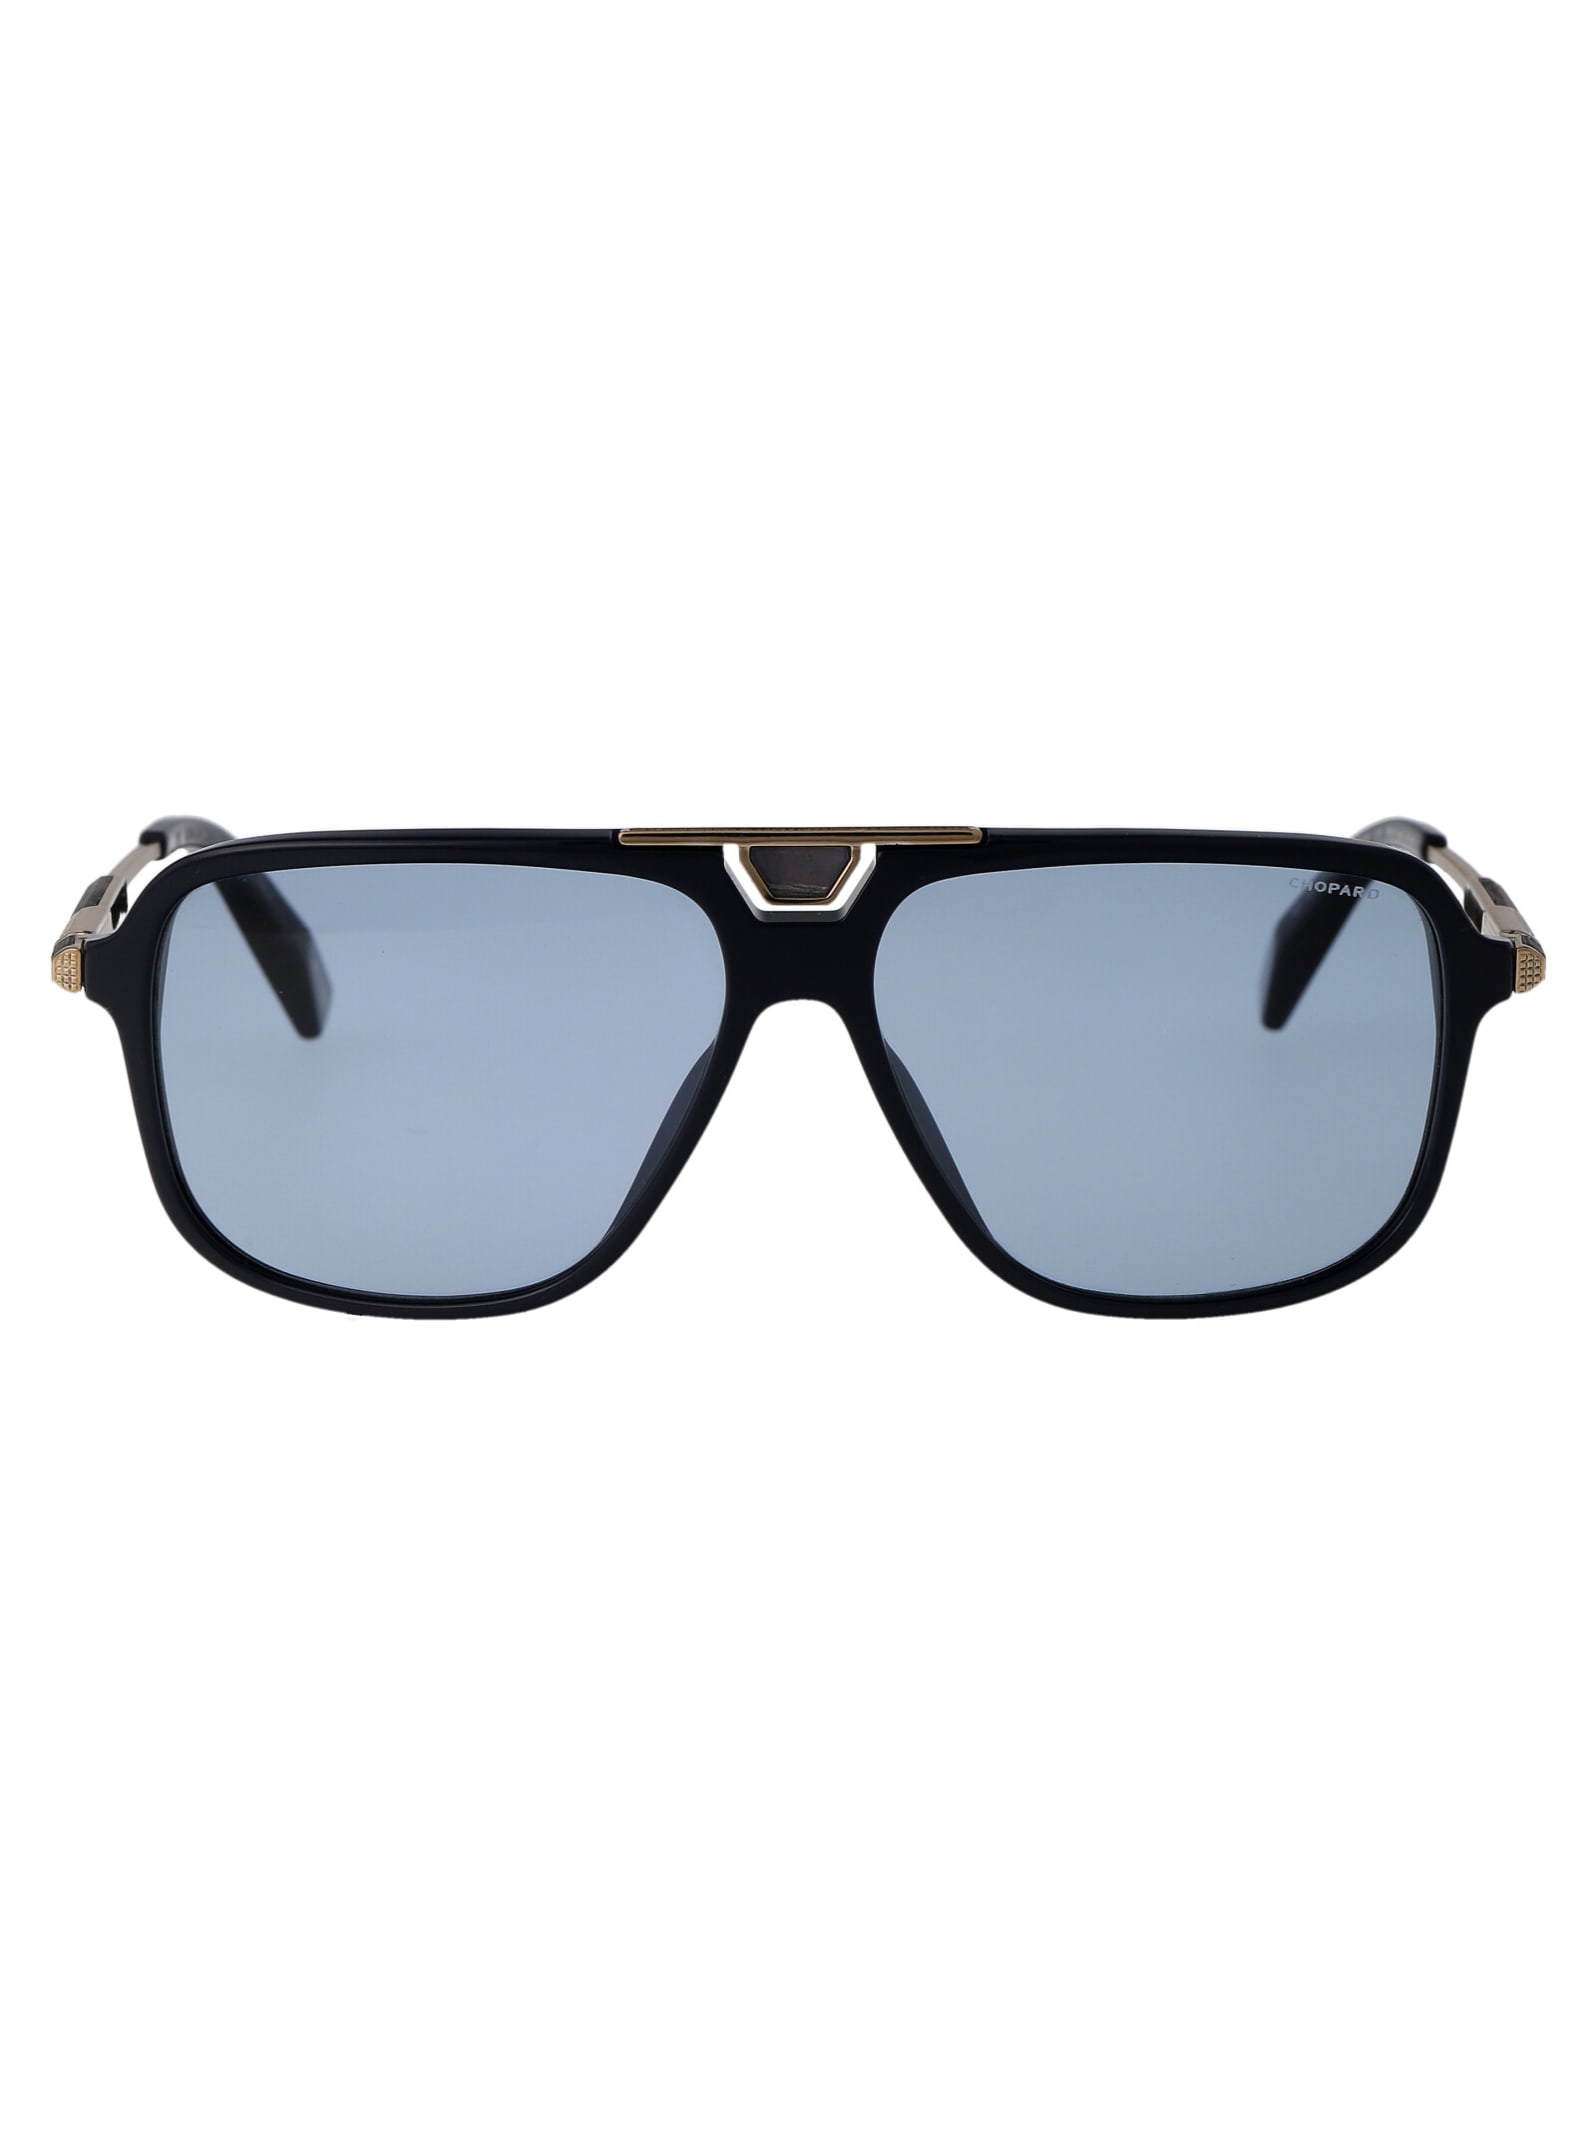 Sch340 Sunglasses